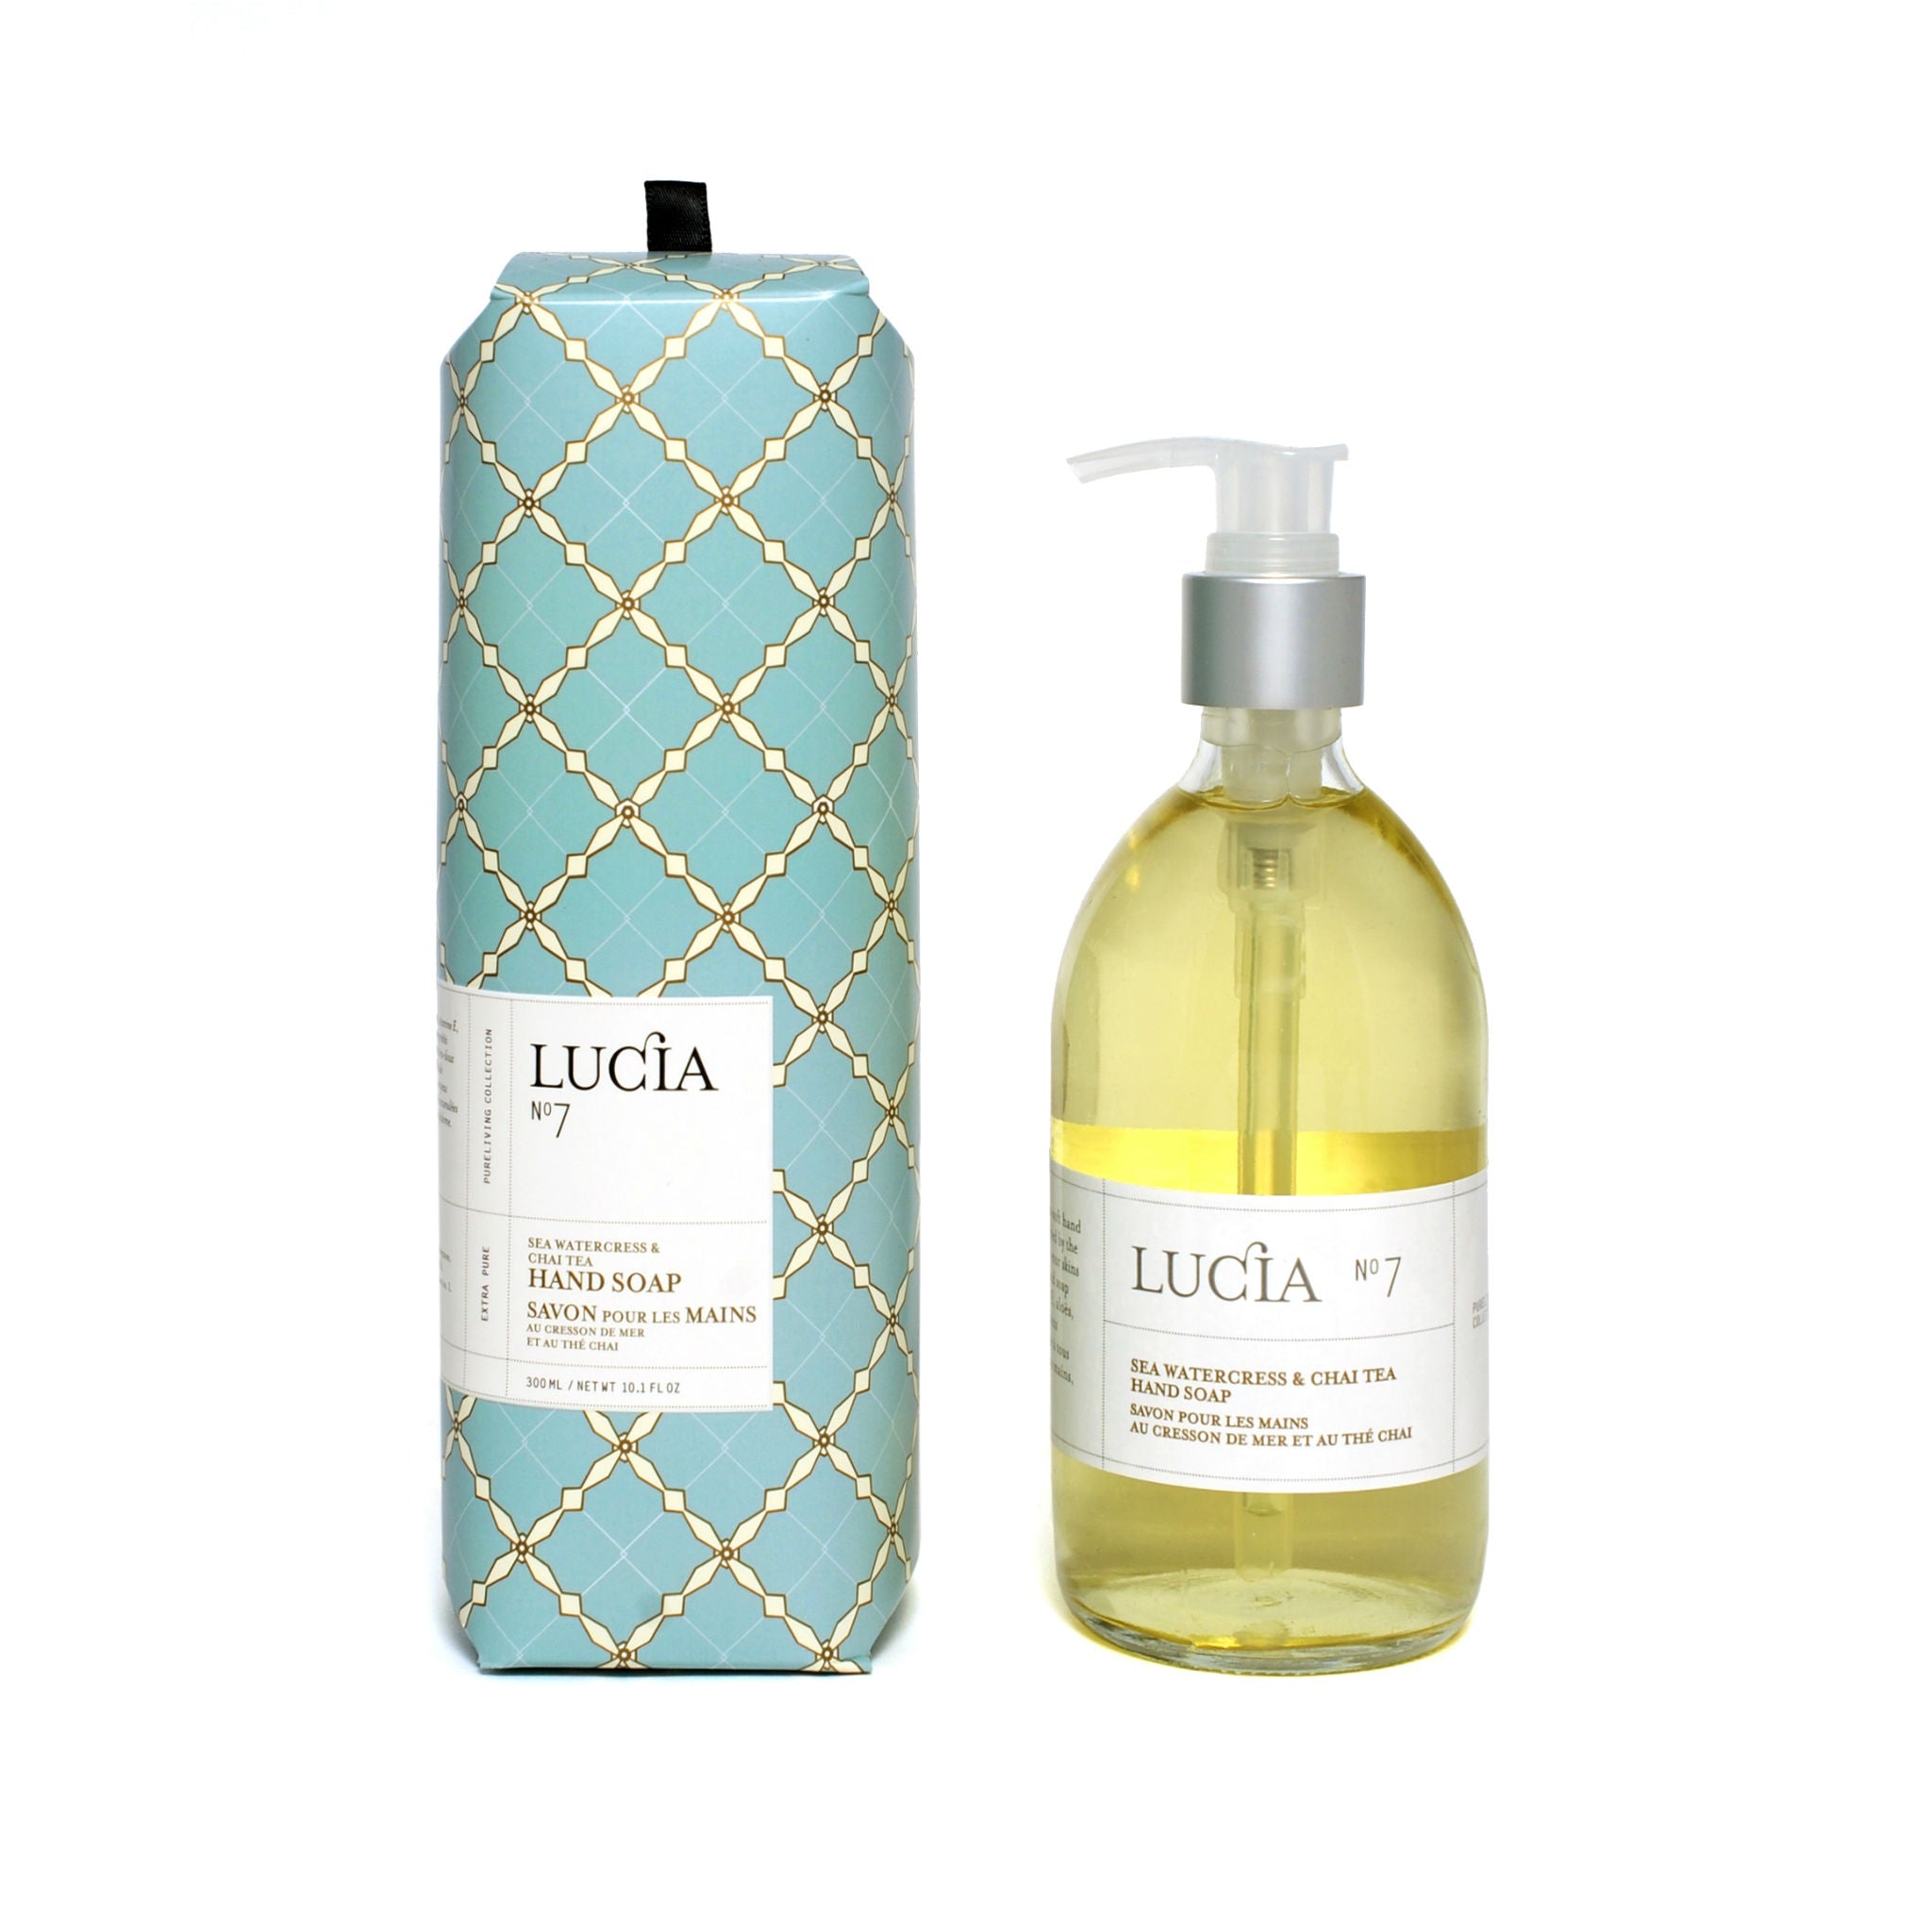 Sea Watercress & Chai Tea, Hand Soap, LUCIA-VONMEL Luxe Gifts